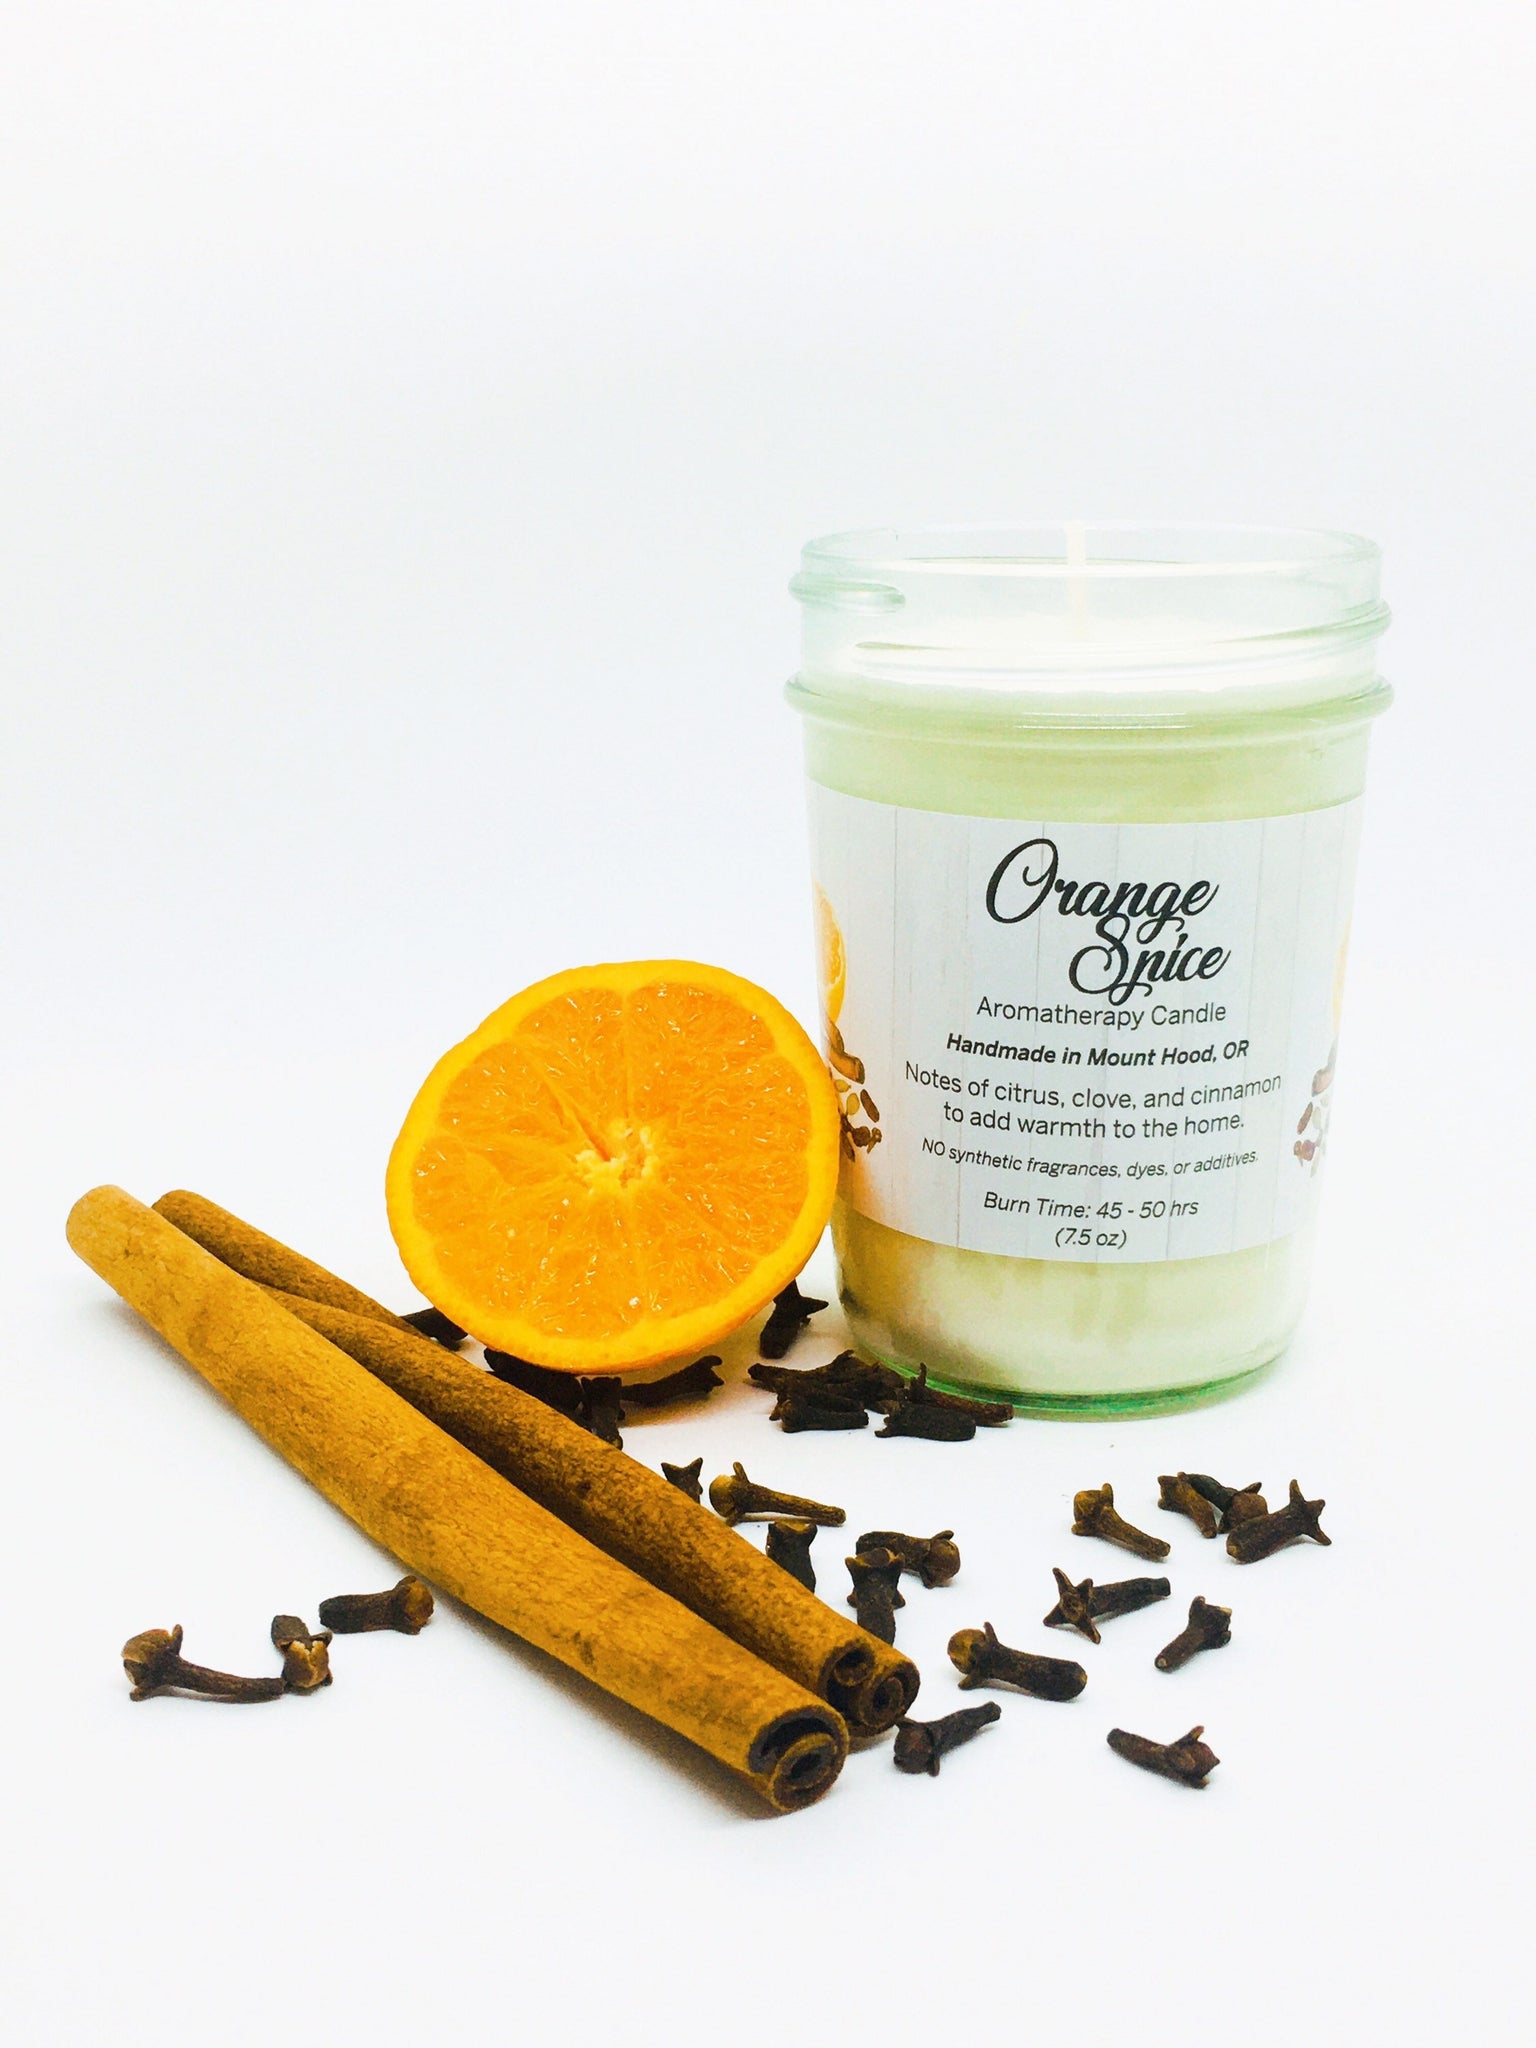 Orange Spice|Soy Candle|Aromatherapy Candle